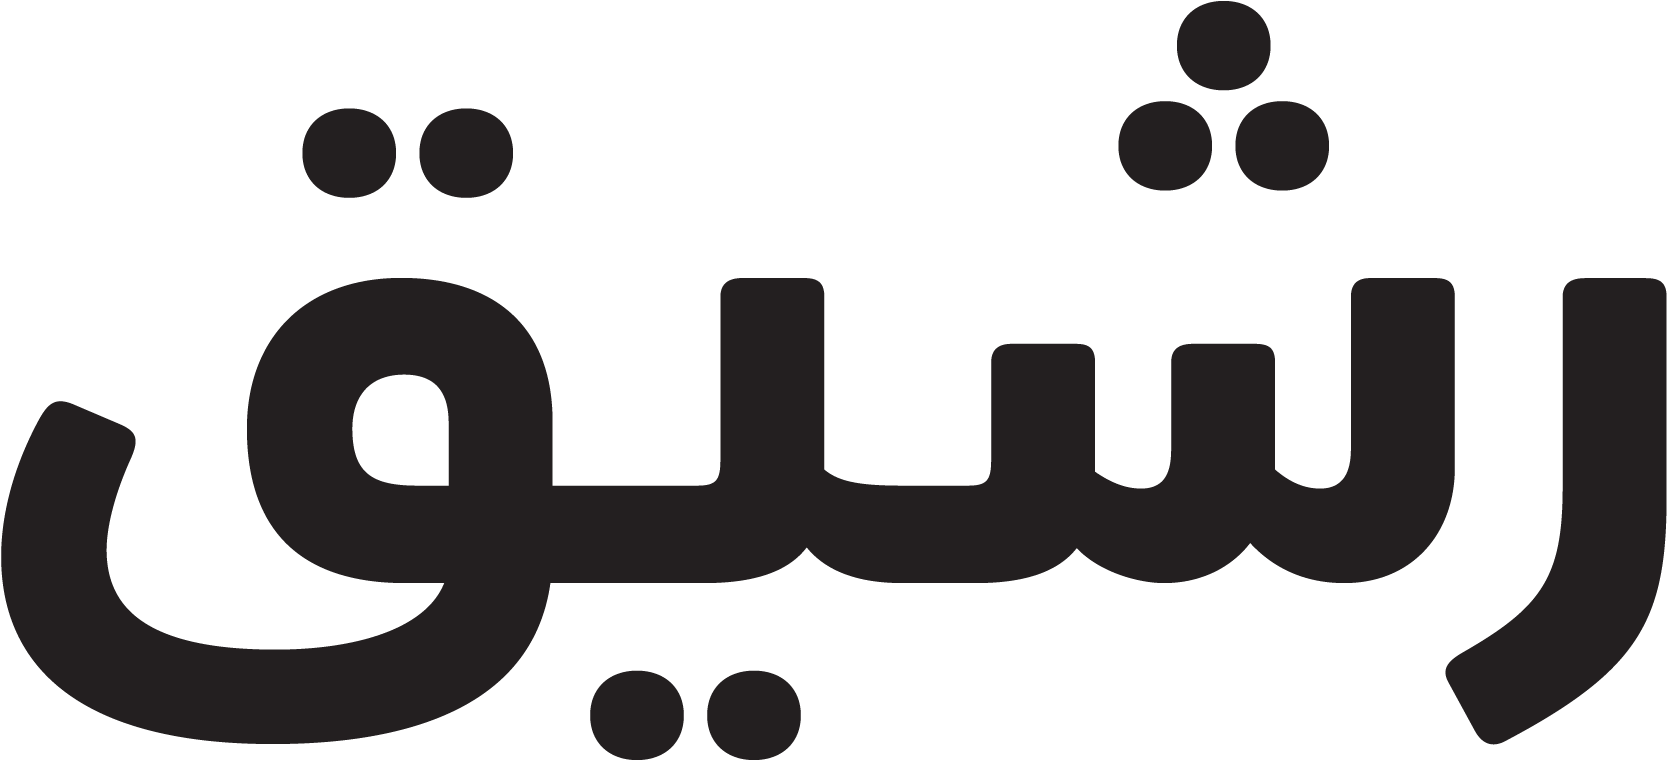 Arabic Sans Serif Font (1880x1040)